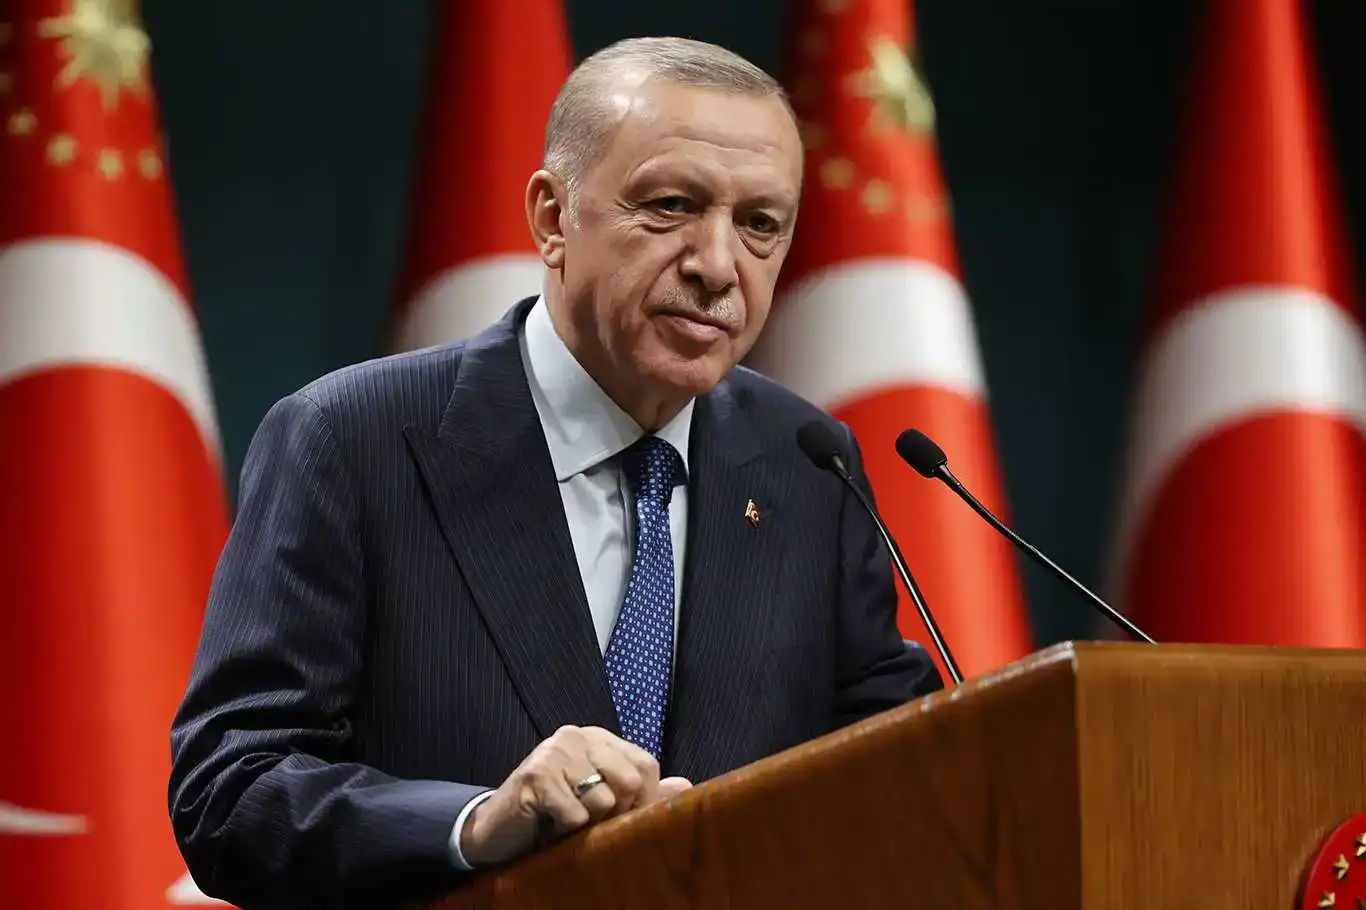 Erdogan: Haniyeh assassination a "despicable attempt to undermine Palestinian cause"